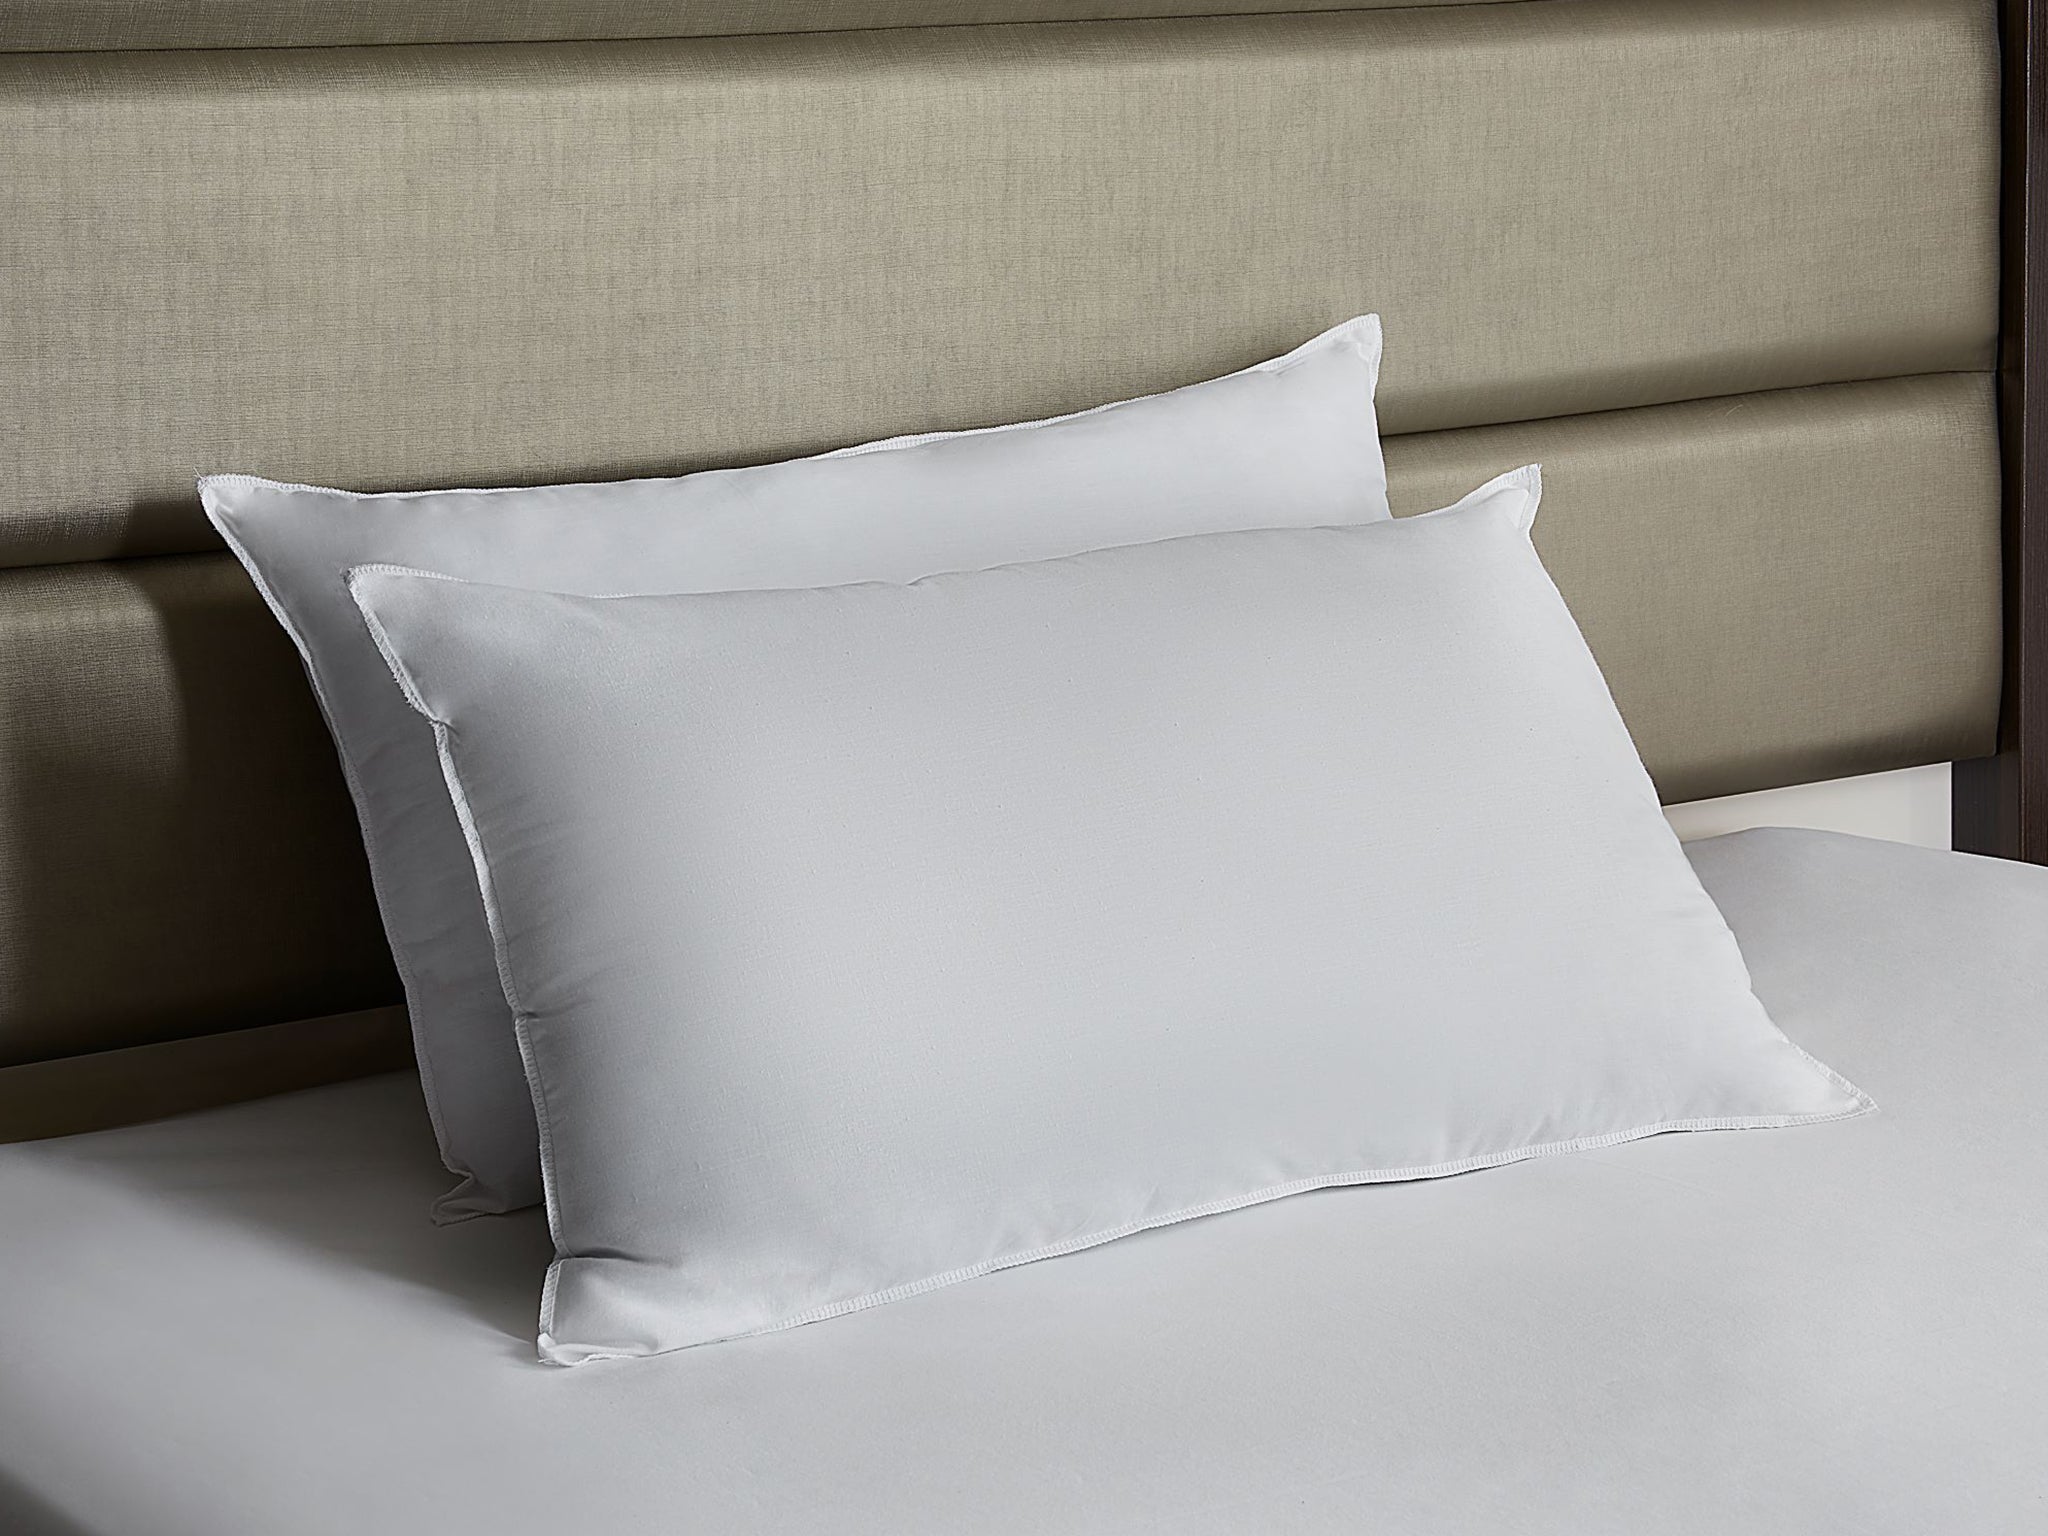 premier-inn-pillow-tiktok-indybest-soft-firm-review-buy.jpg